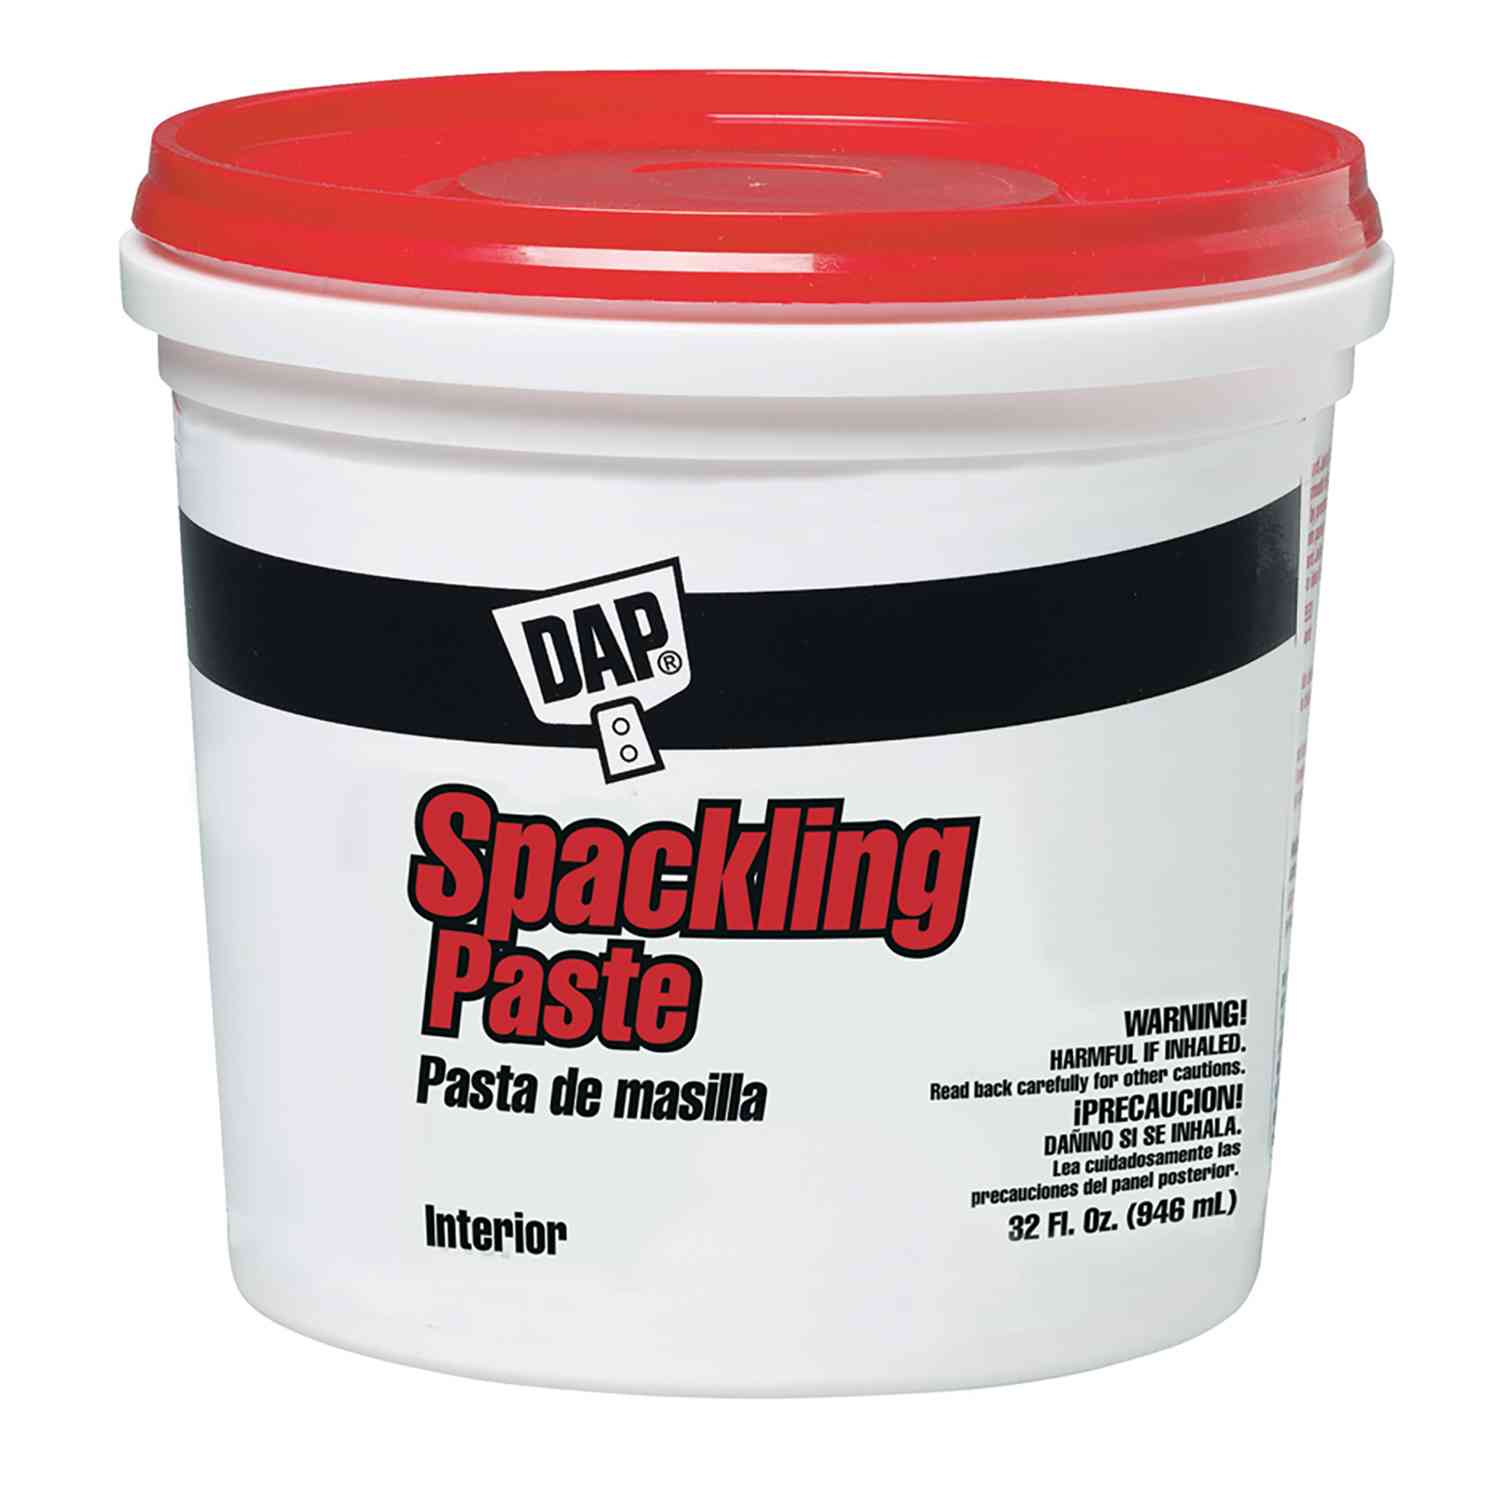 Foto del producto Pasta para Masillar Spackling Paste